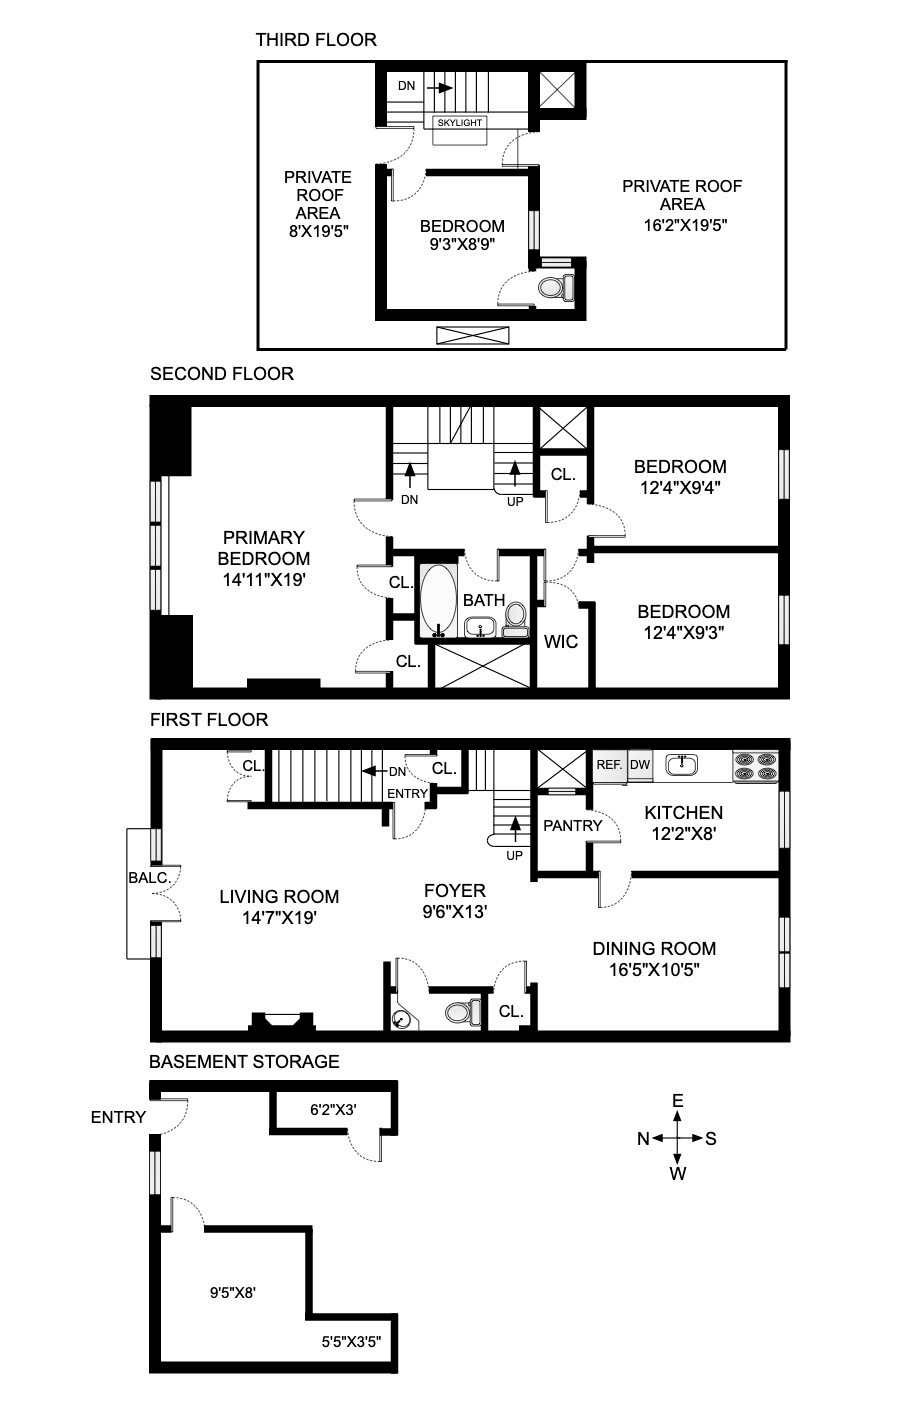 floorplan showing three floors